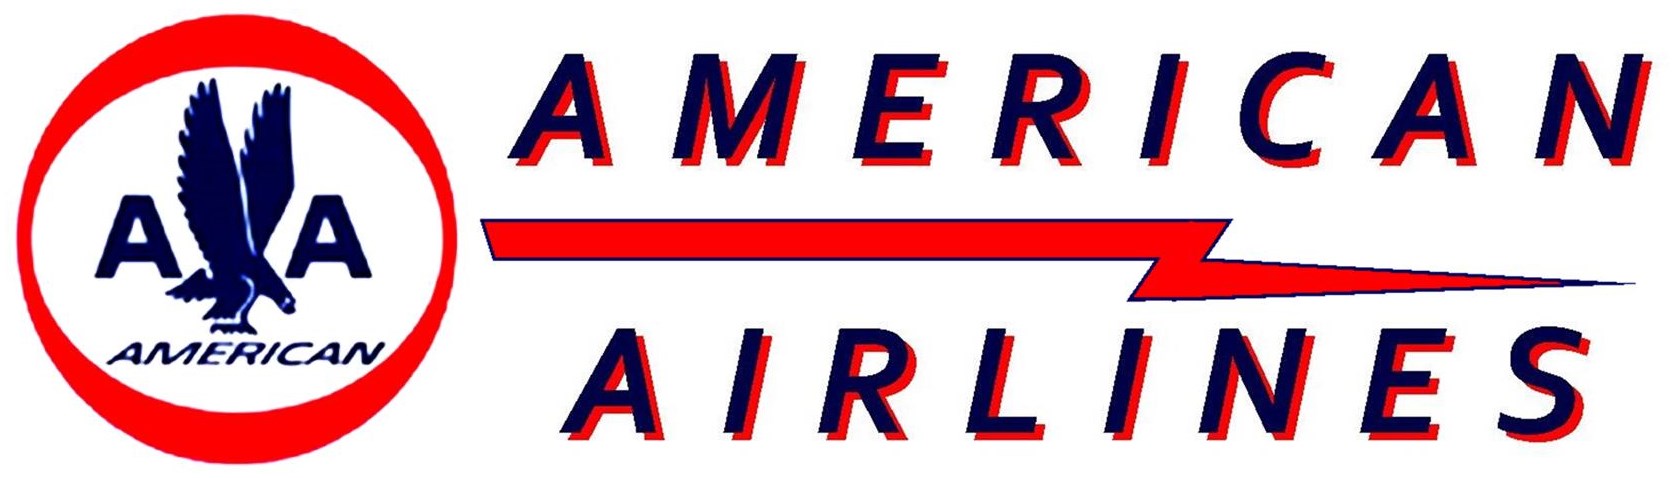 American Airlines
Keywords: American Airlines